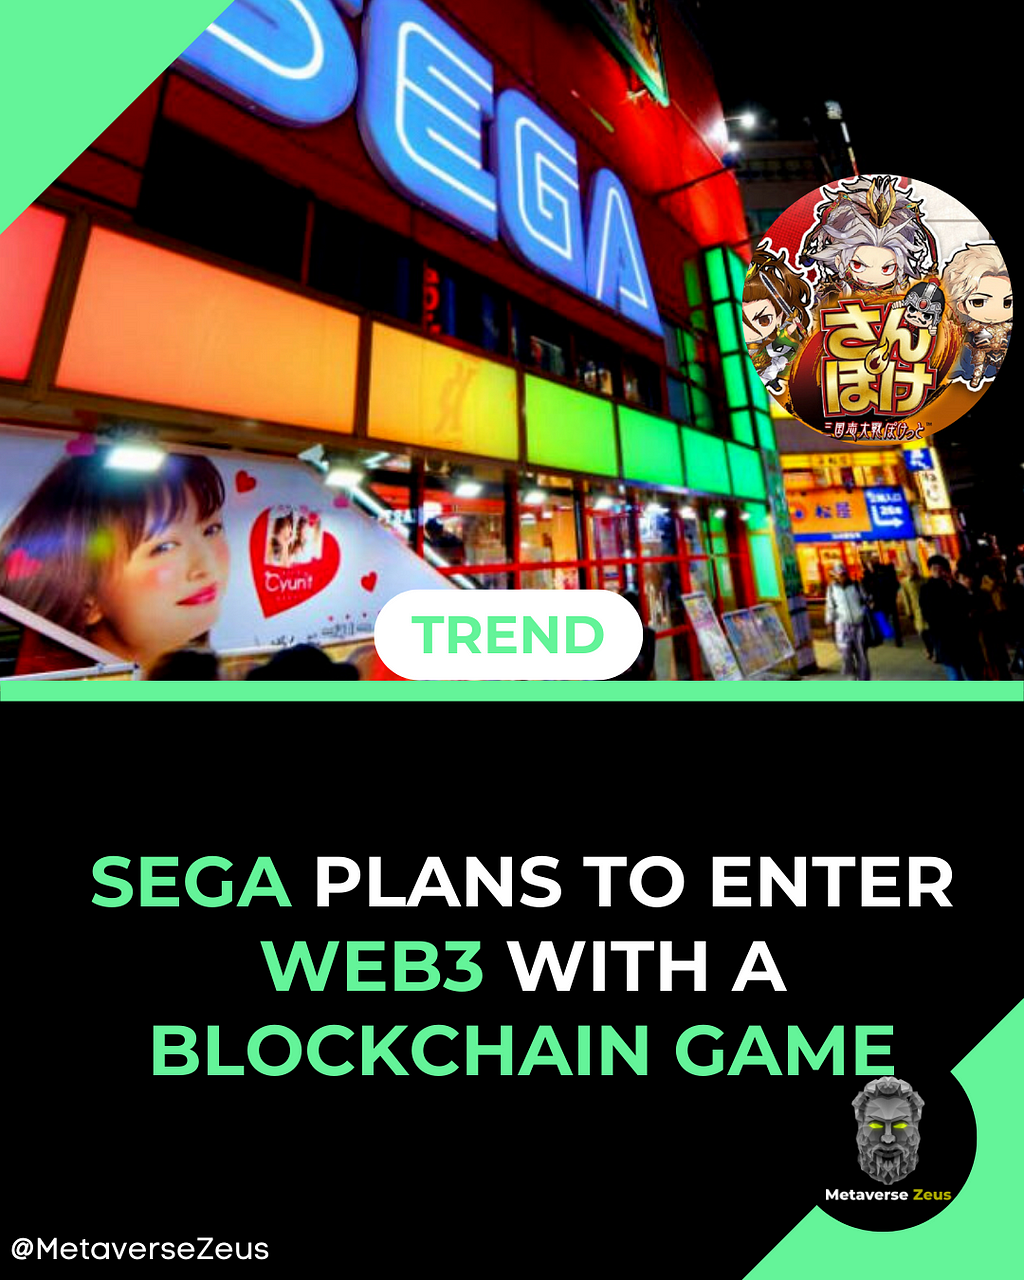 Sega plans to enter web3 with a Blockchain Game.